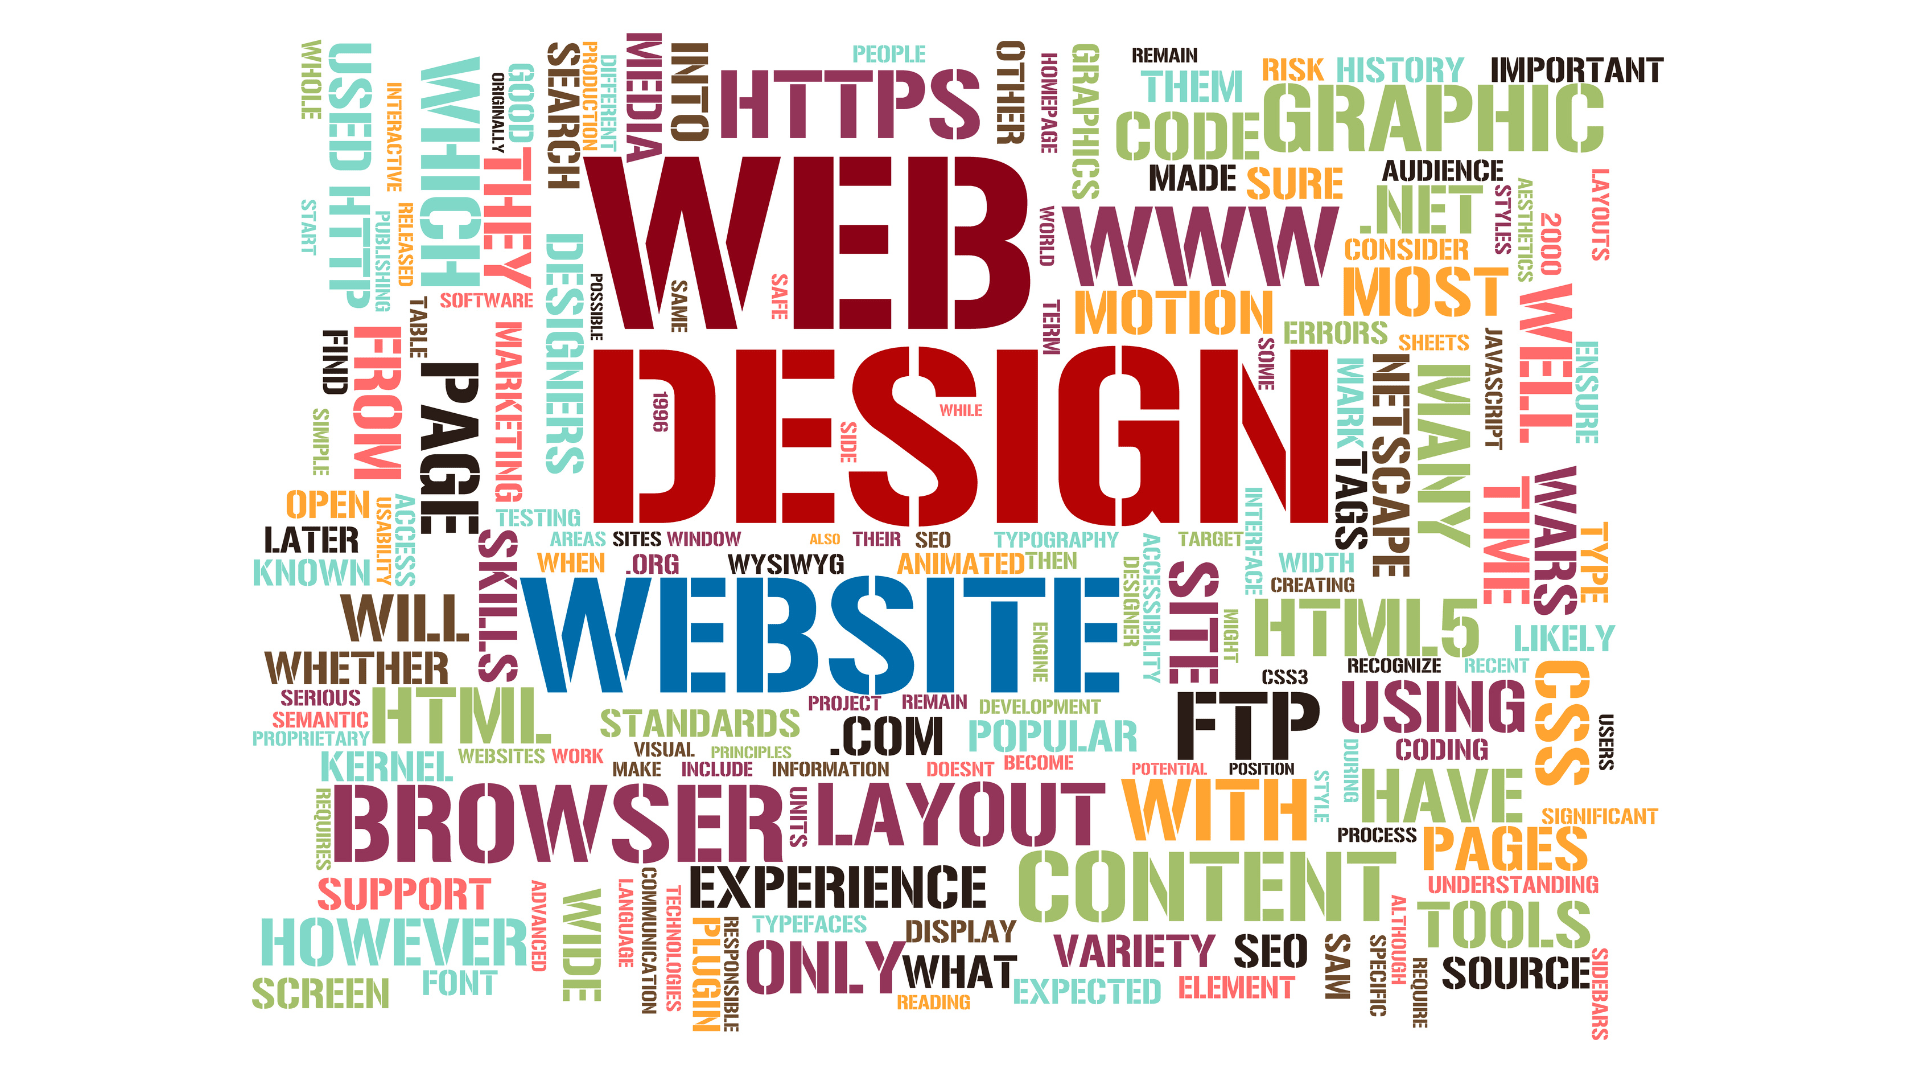 Top five myths about website design (web design) from Breeder Designs